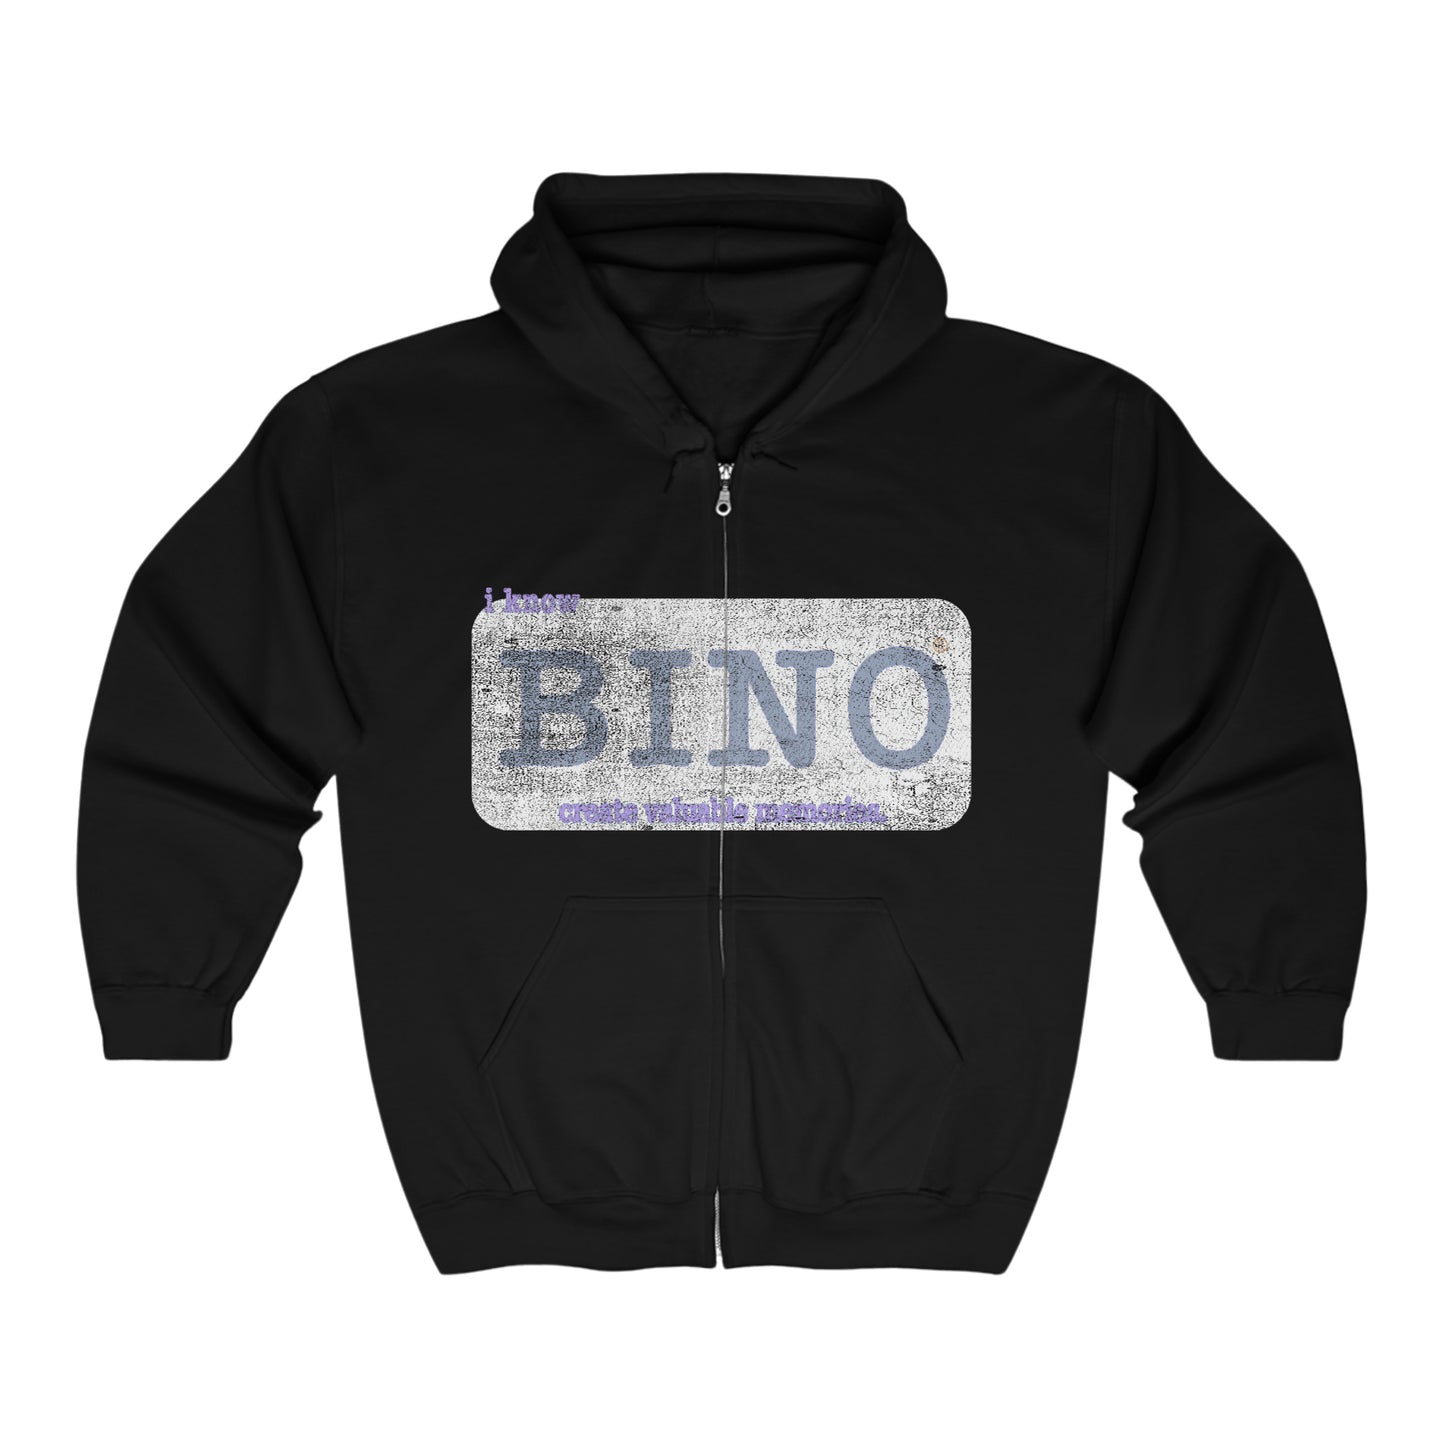 "i know BINO®" 2.0 zip-up hoodie